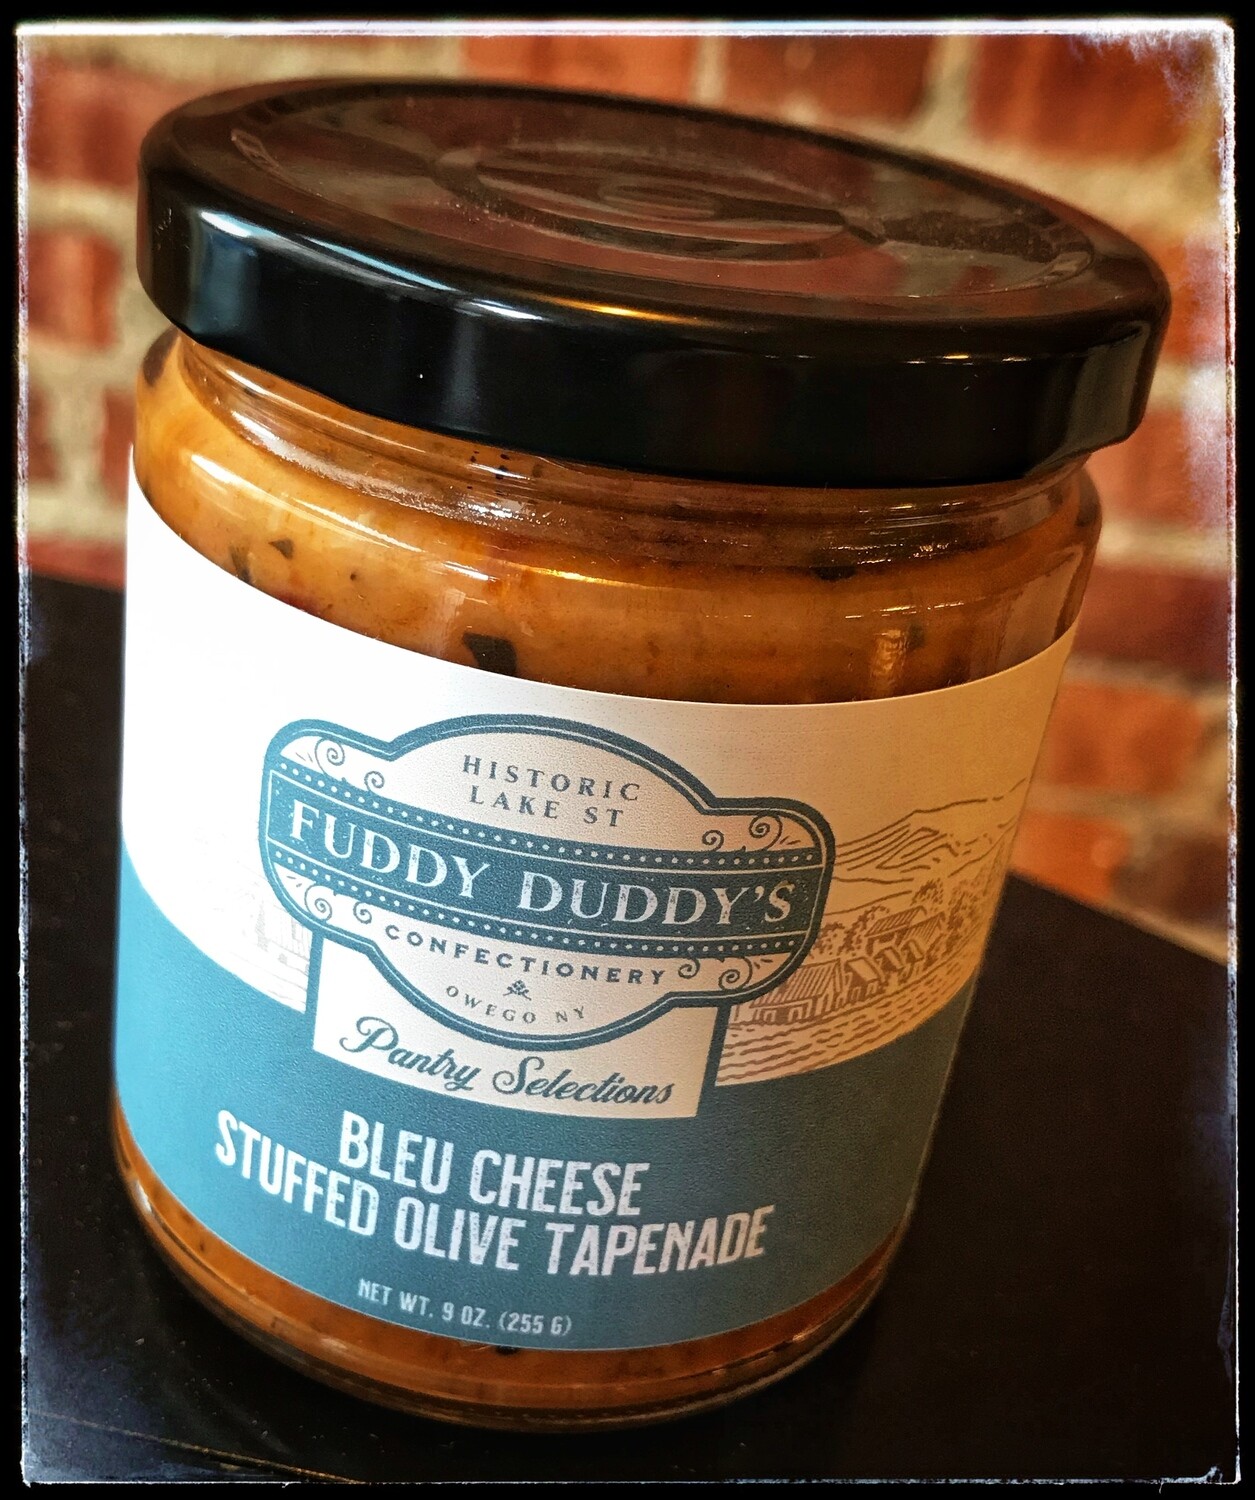 Fuddy Duddy's Bleu Cheese Stuffed Olive Tapenade